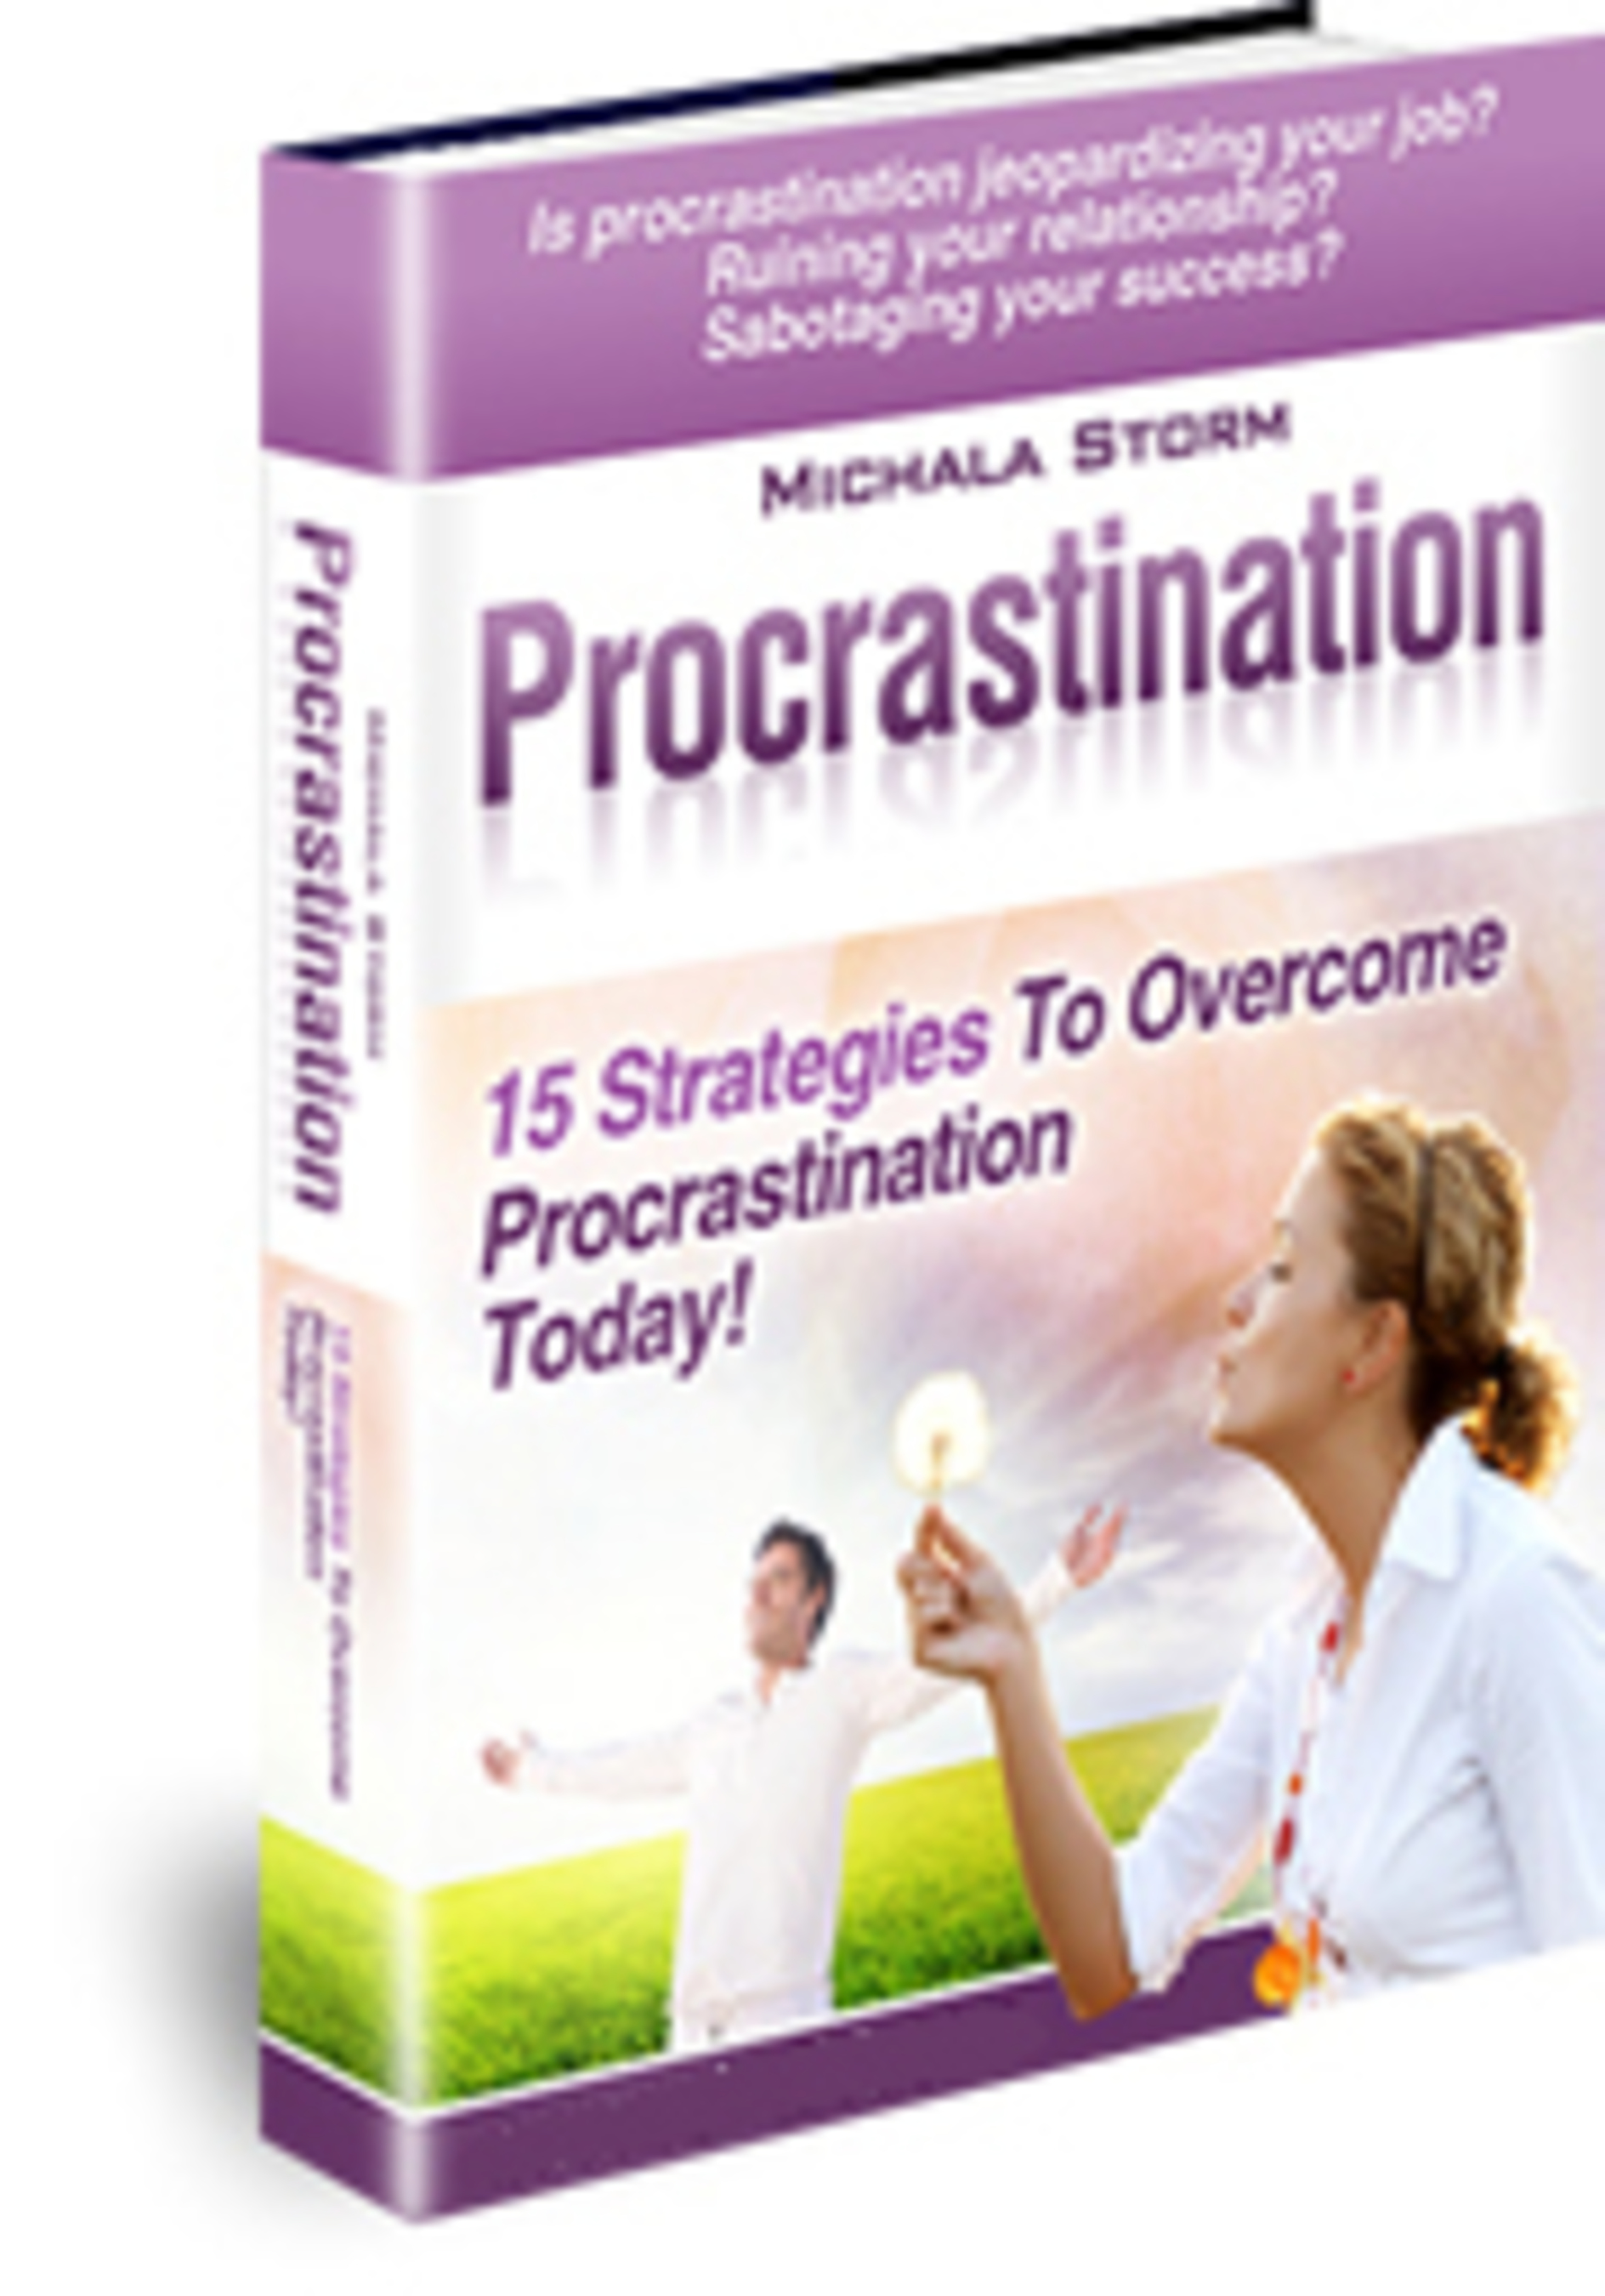 Procrastination - 15 Strategies To Overcome Procrastination Today! (PRNewsFoto/Michala Storm)